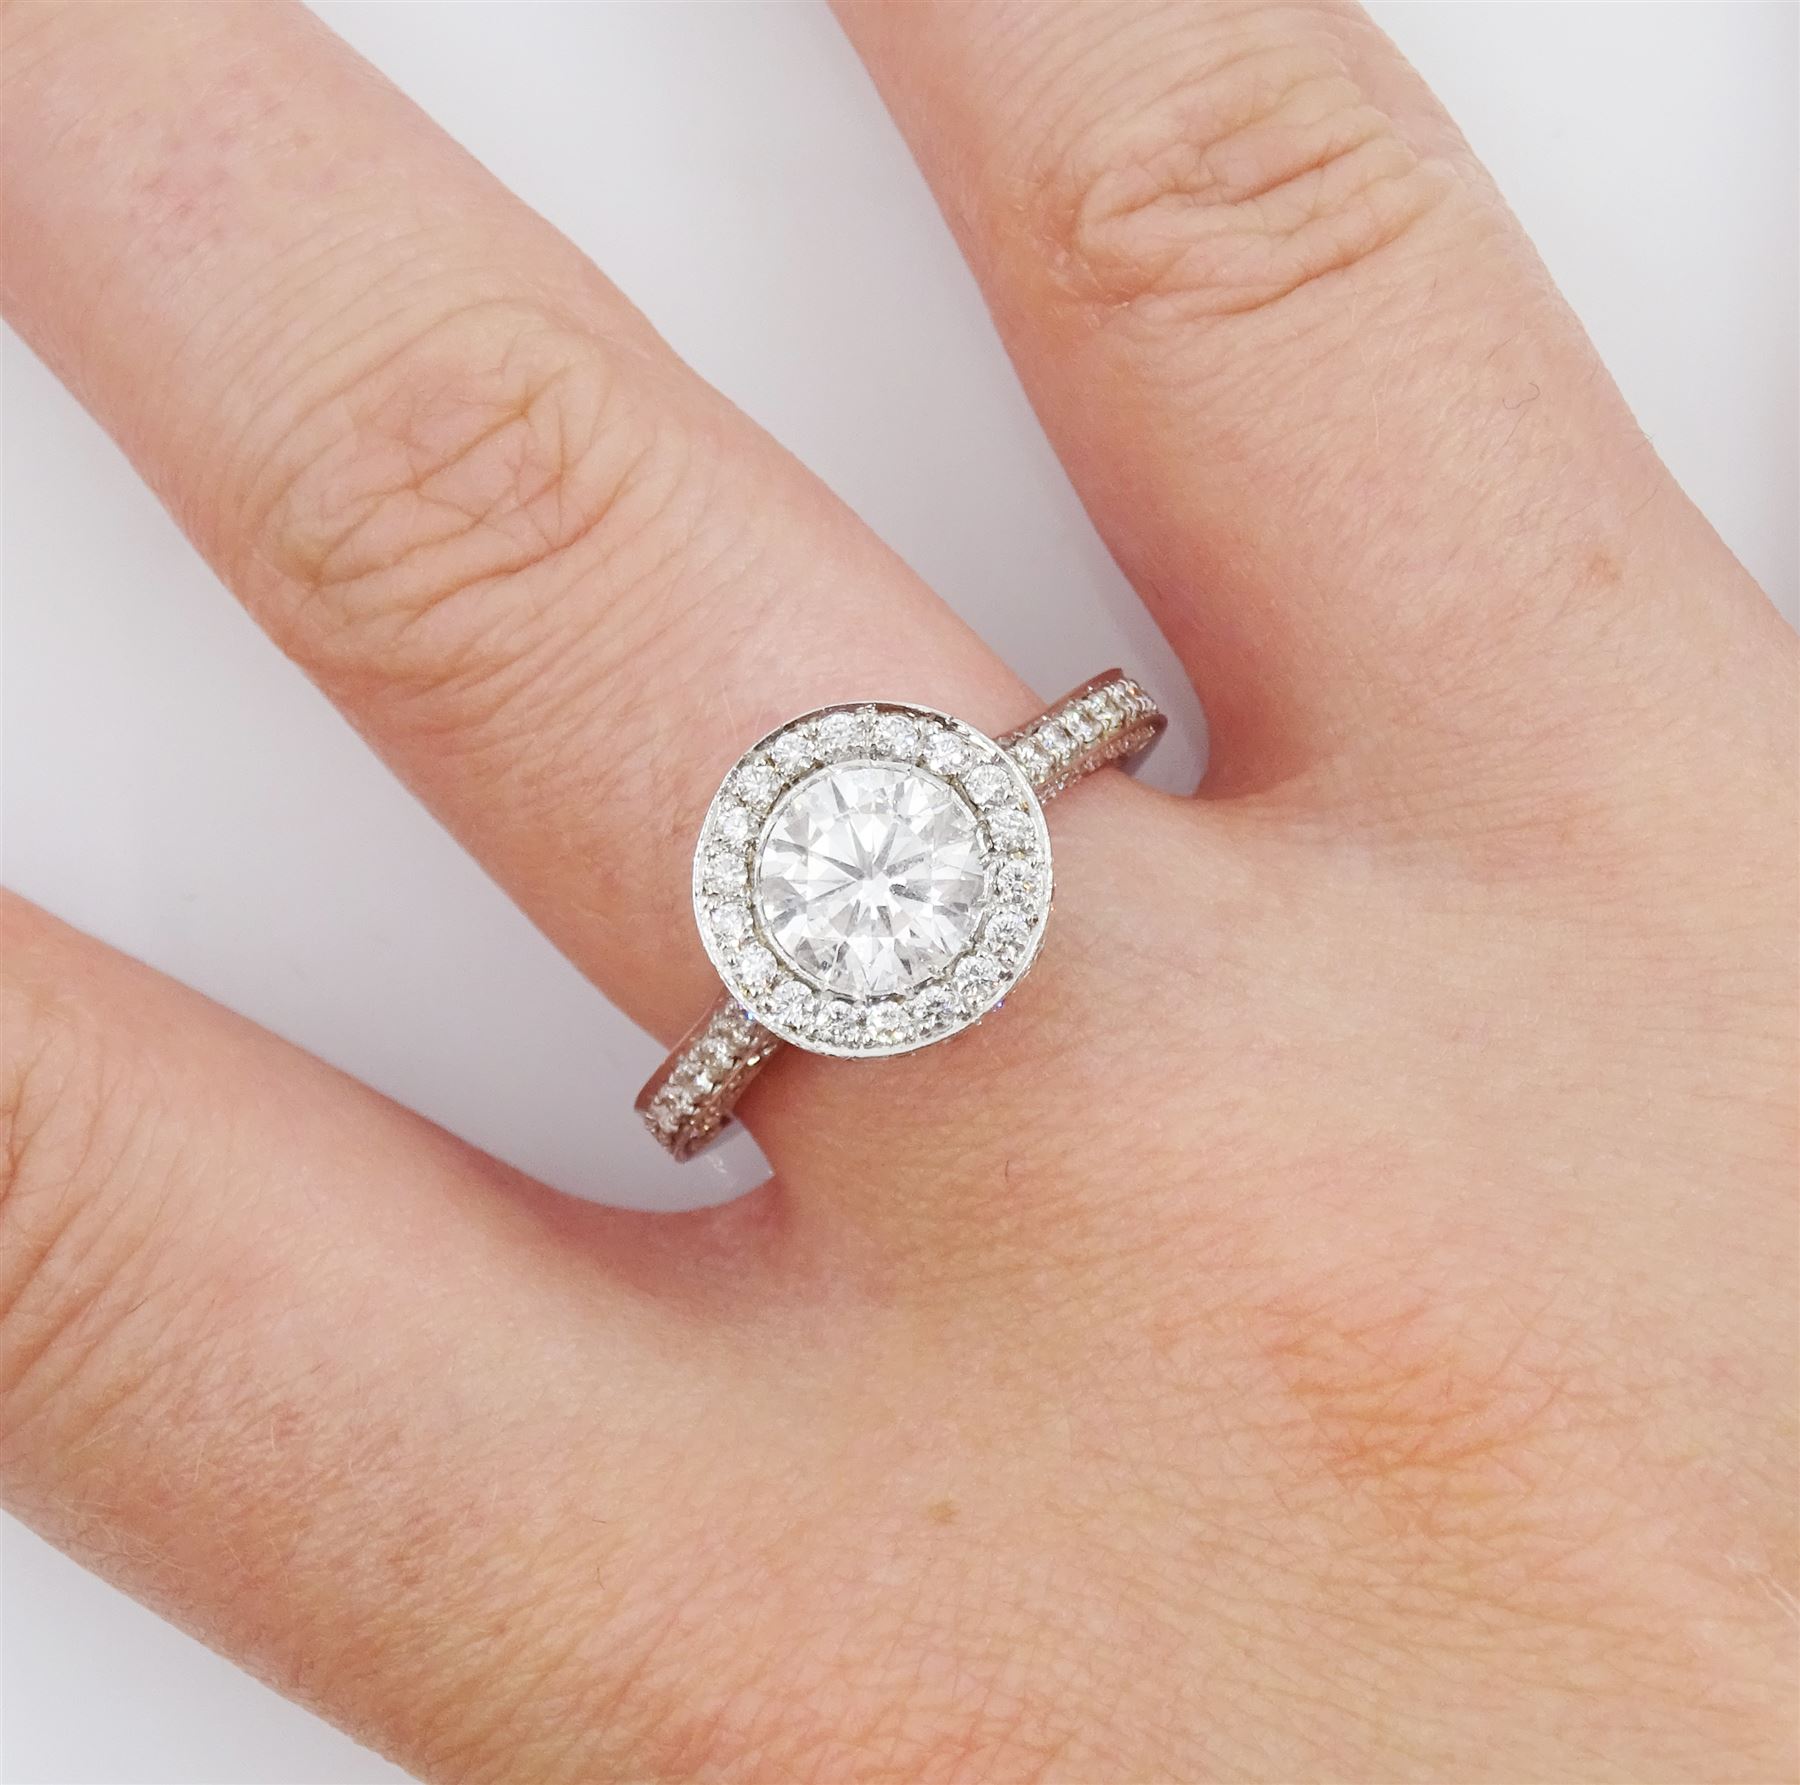 18ct white gold single stone round brilliant cut diamond ring - Image 2 of 4